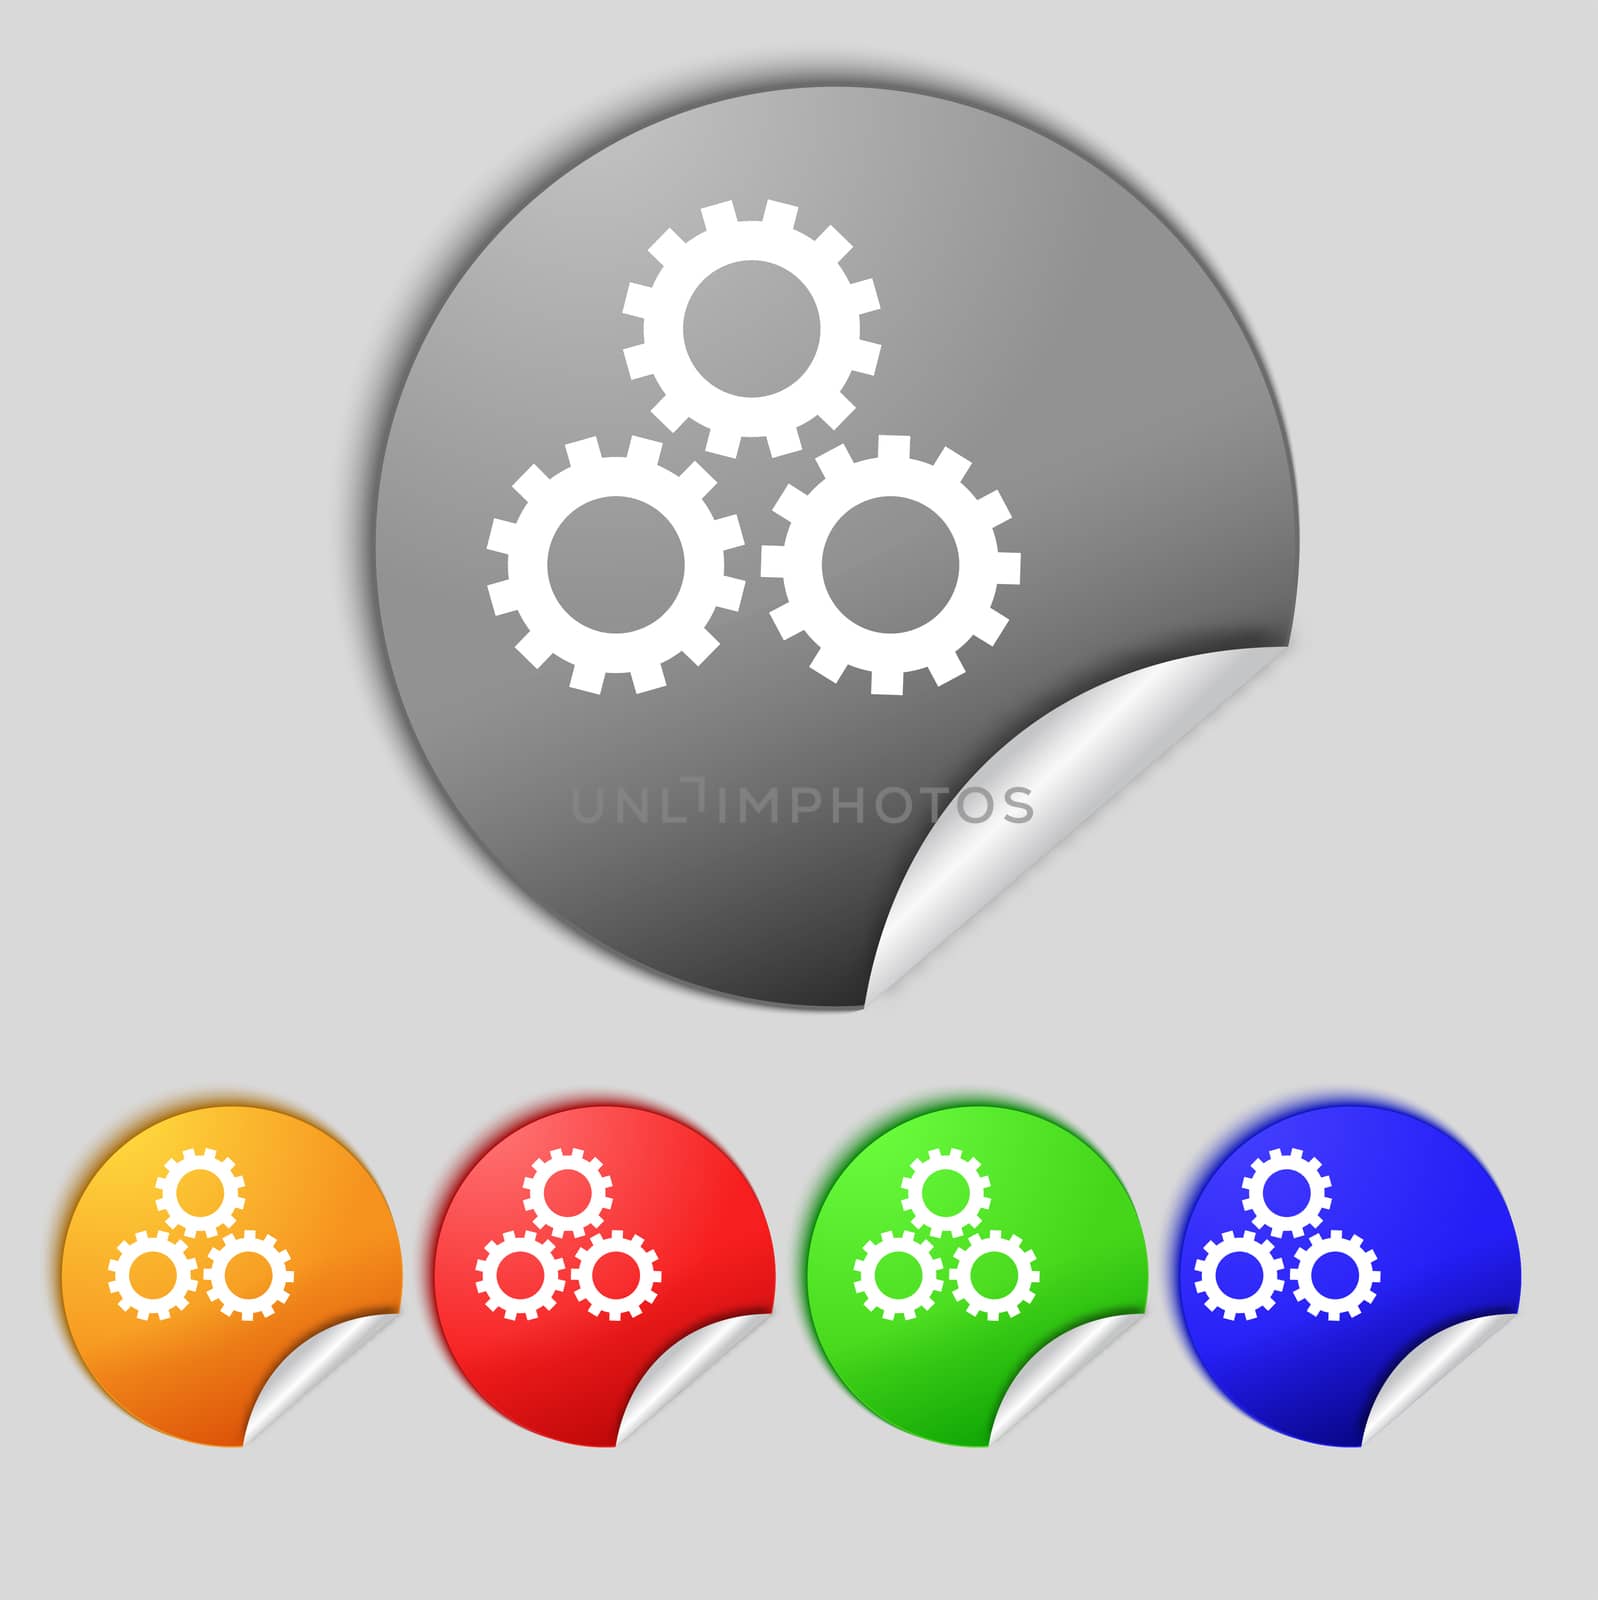 Cog settings sign icon. Cogwheel gear mechanism symbol. Set colourful buttons.  illustration